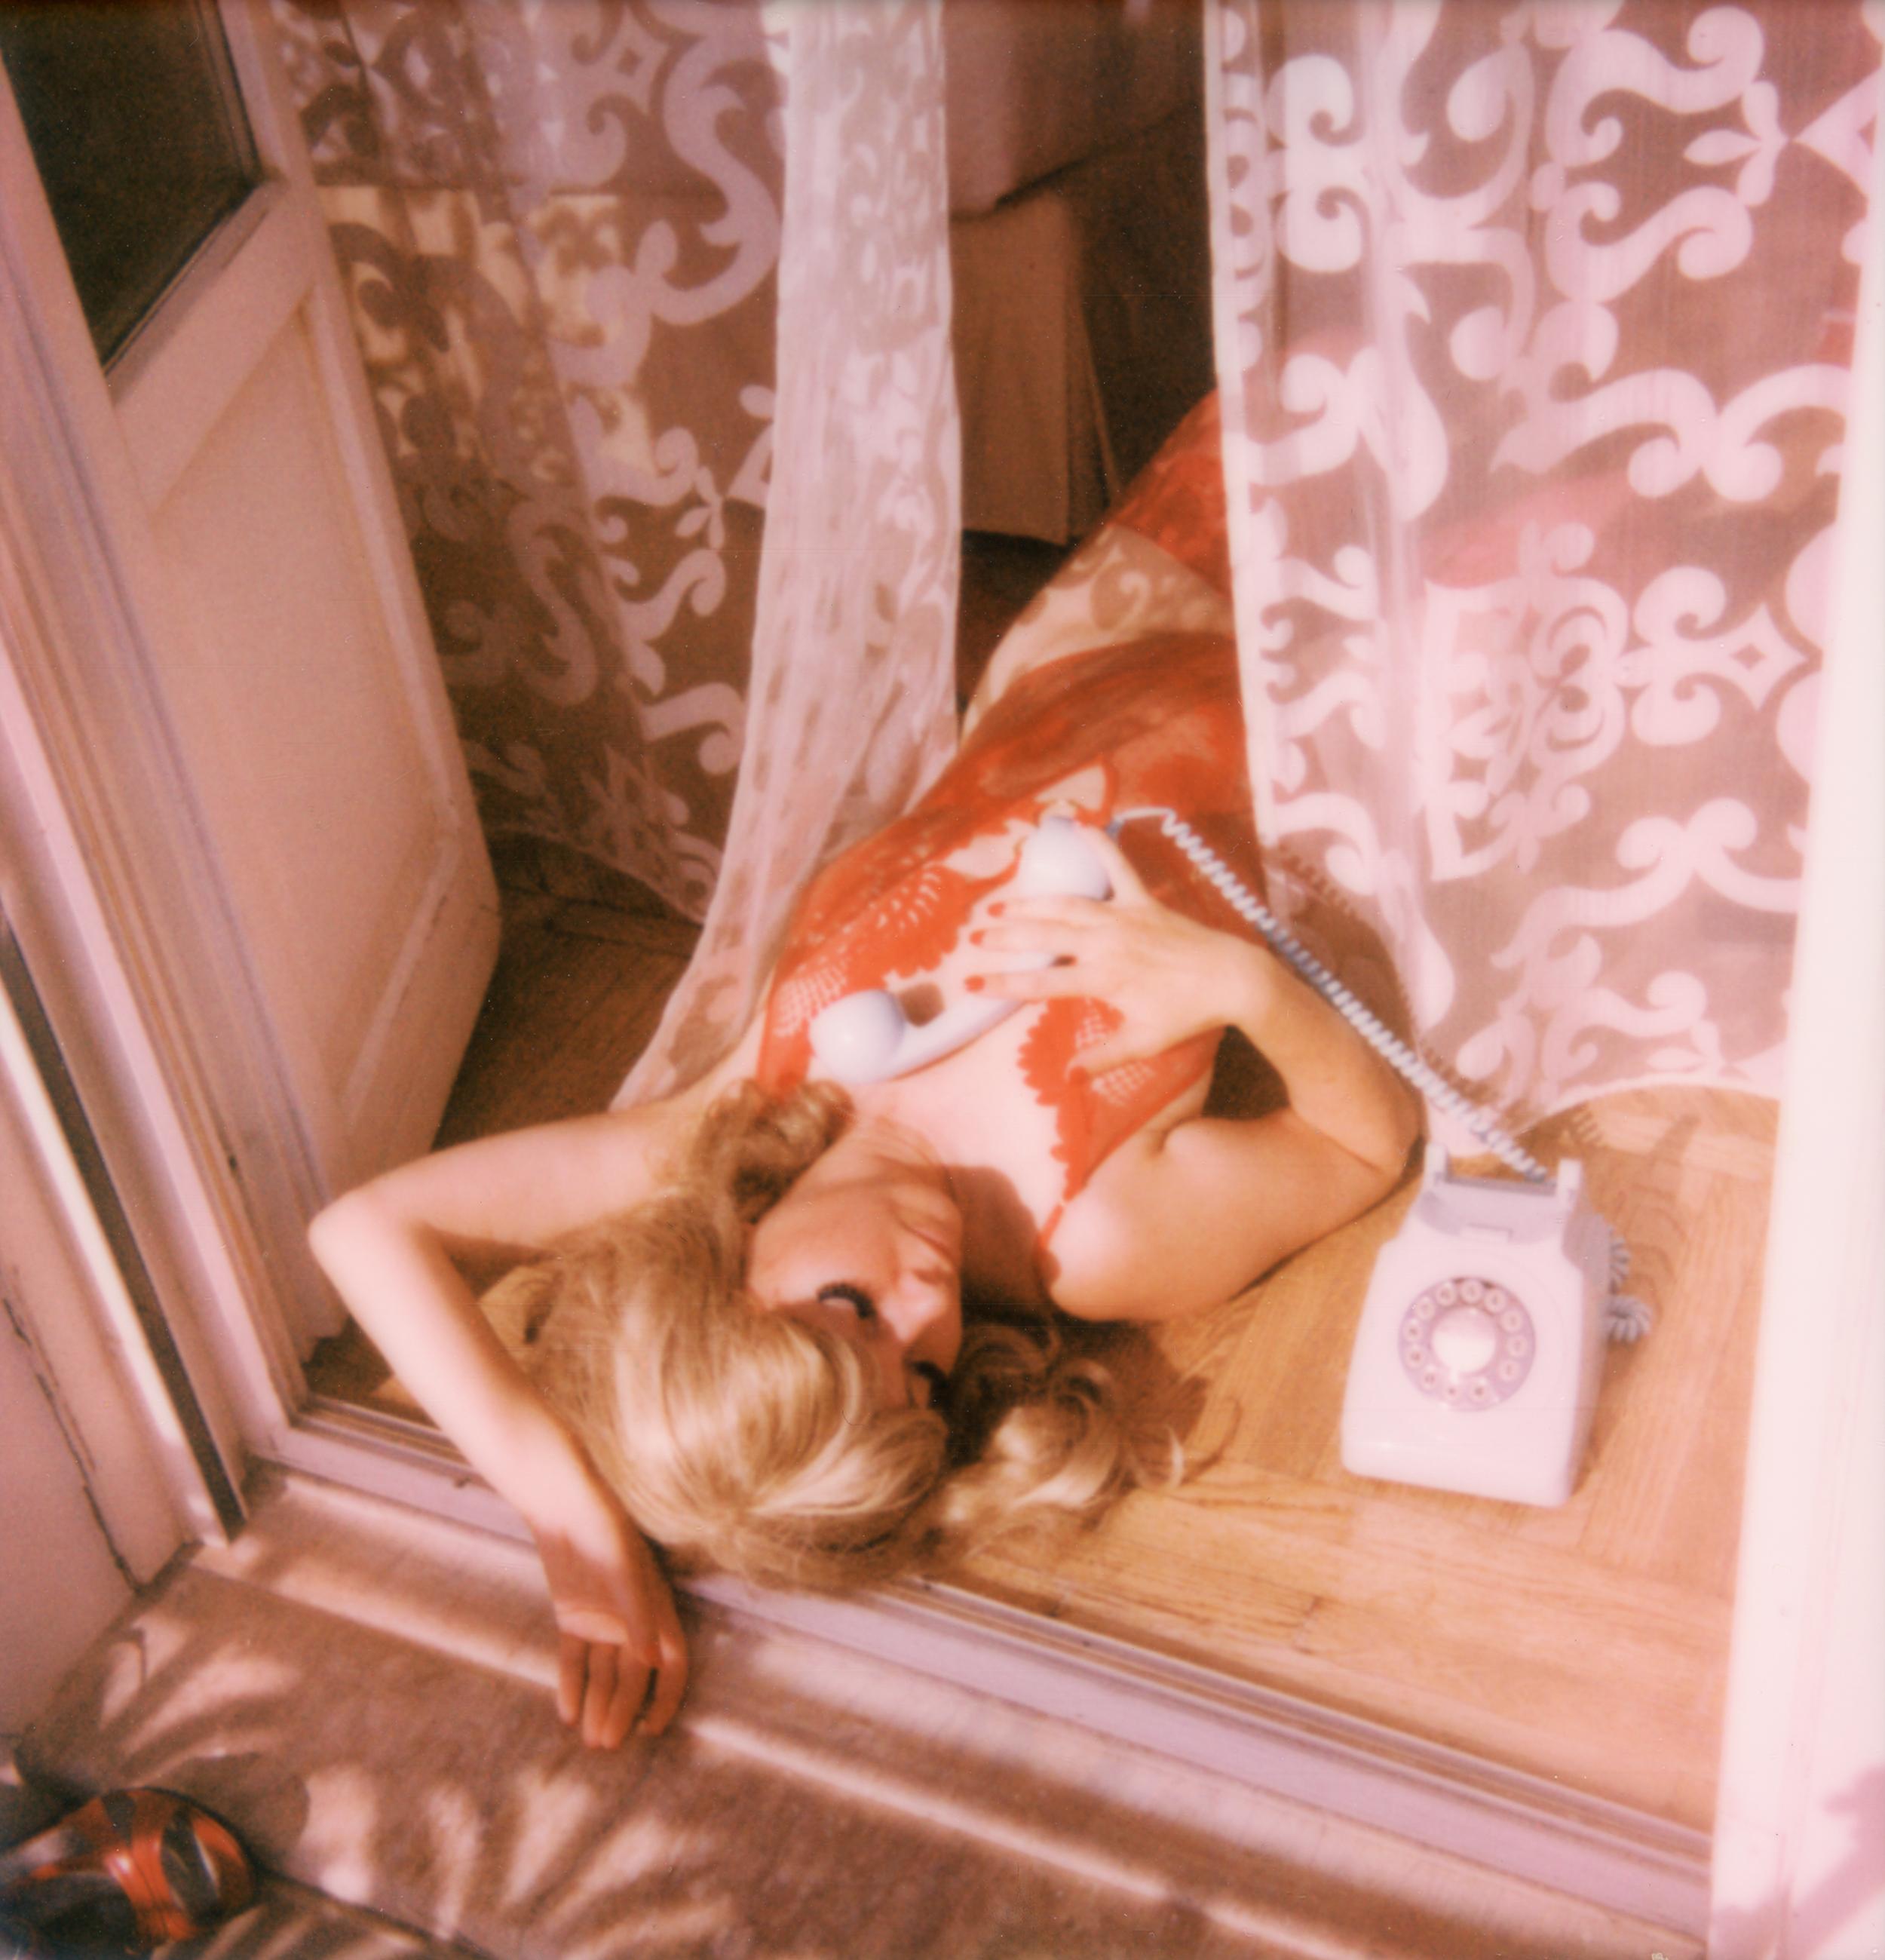 Slumber du matin - Contemporain, Polaroid, Femme, XXIe siècle